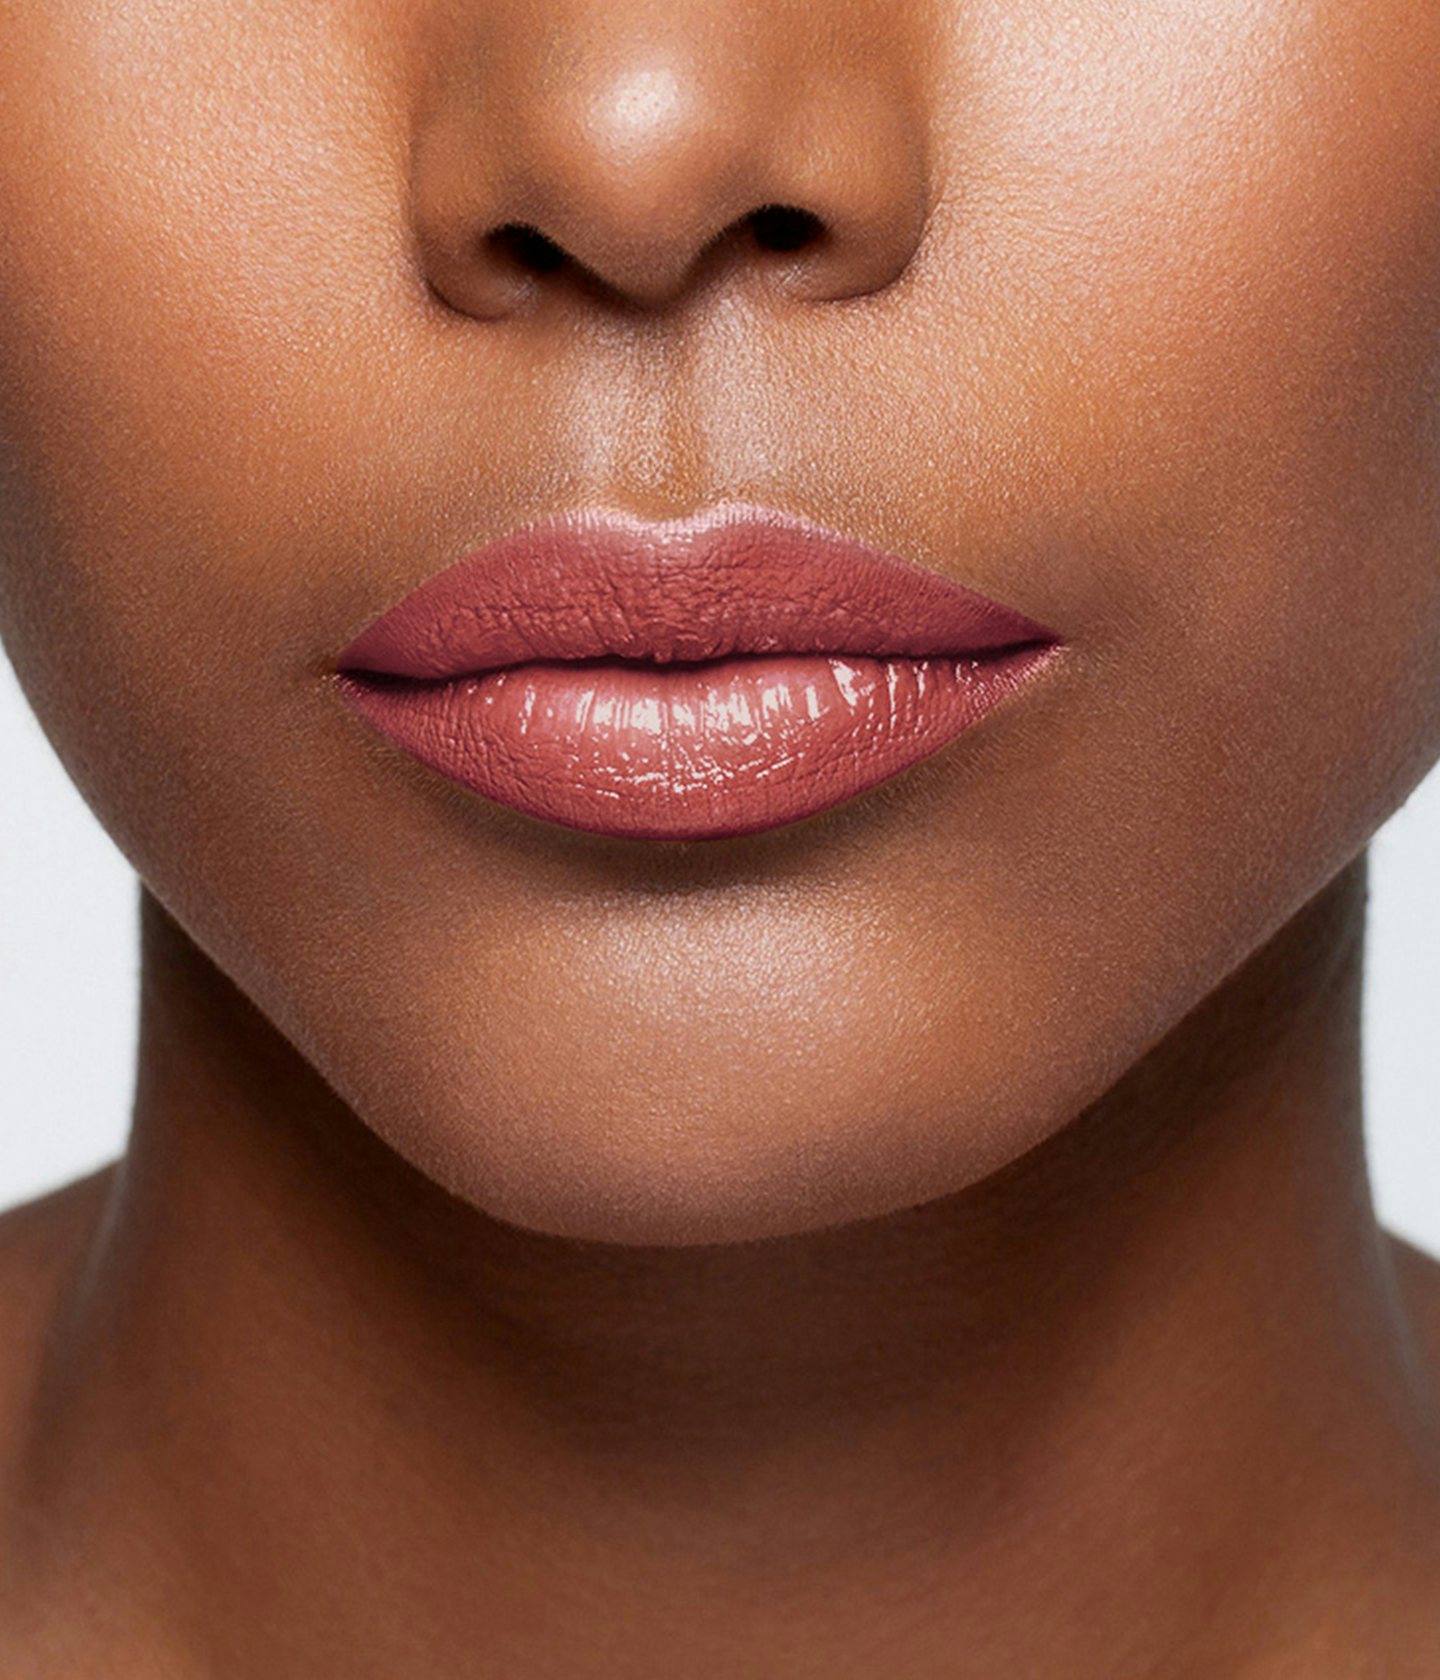 La bouche rouge P balm lipstick shade on the lips of a dark skin model